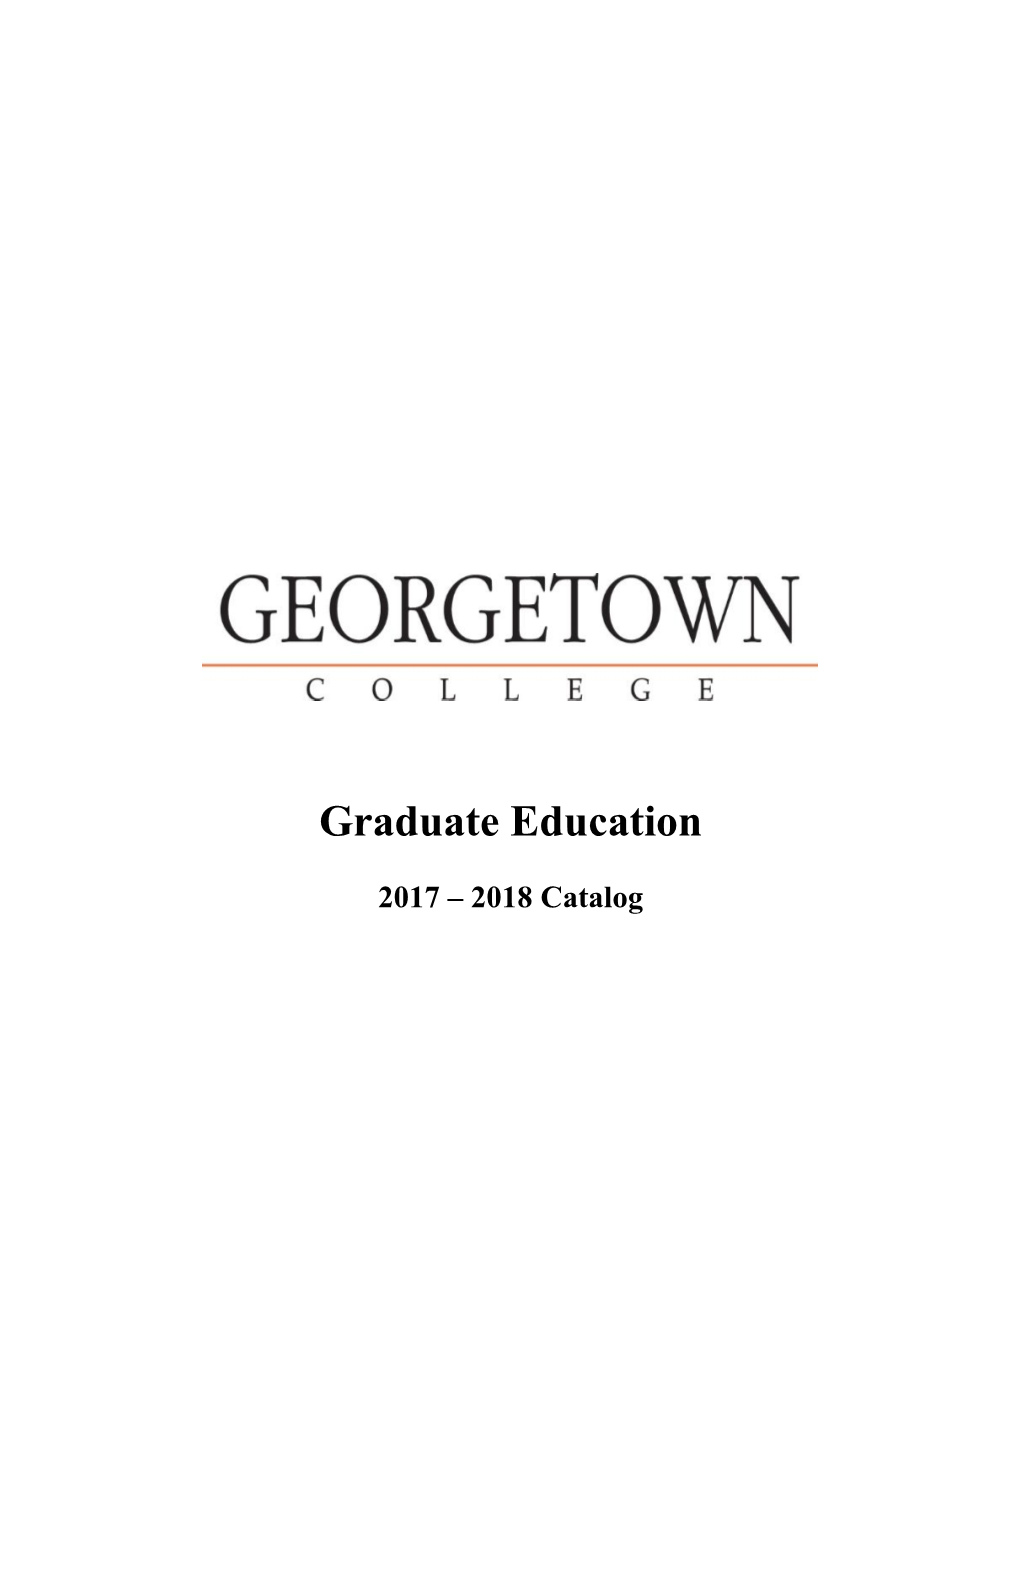 Georgetown College Graduate Education Catalog 2017-2018